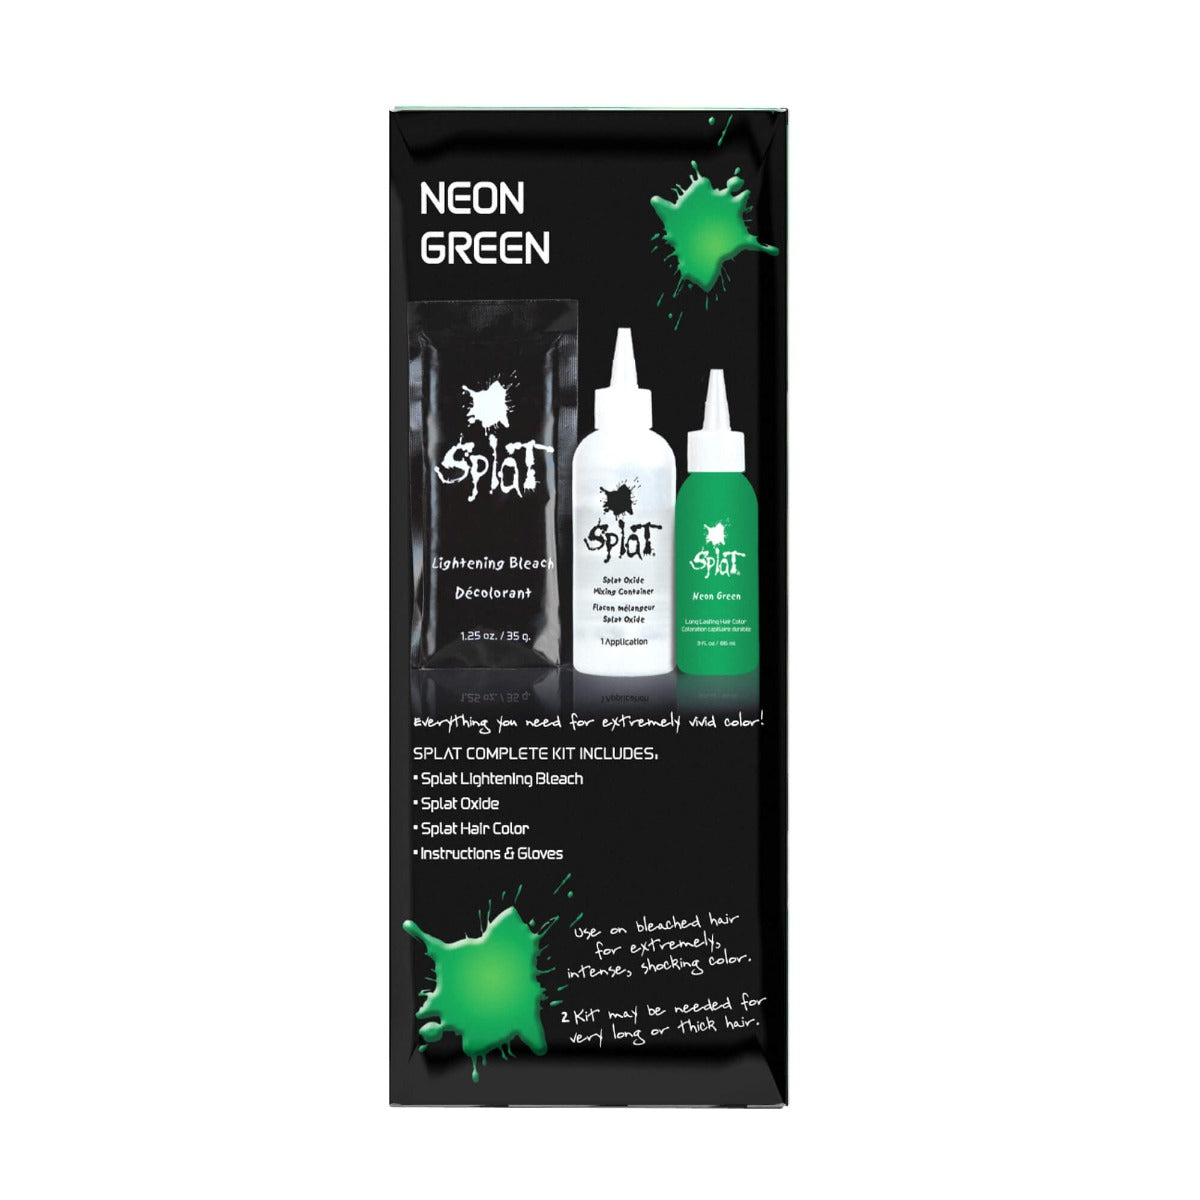 Neon Green: Original Neon Green Semi-Permanent Hair Dye Complete Kit with Bleach